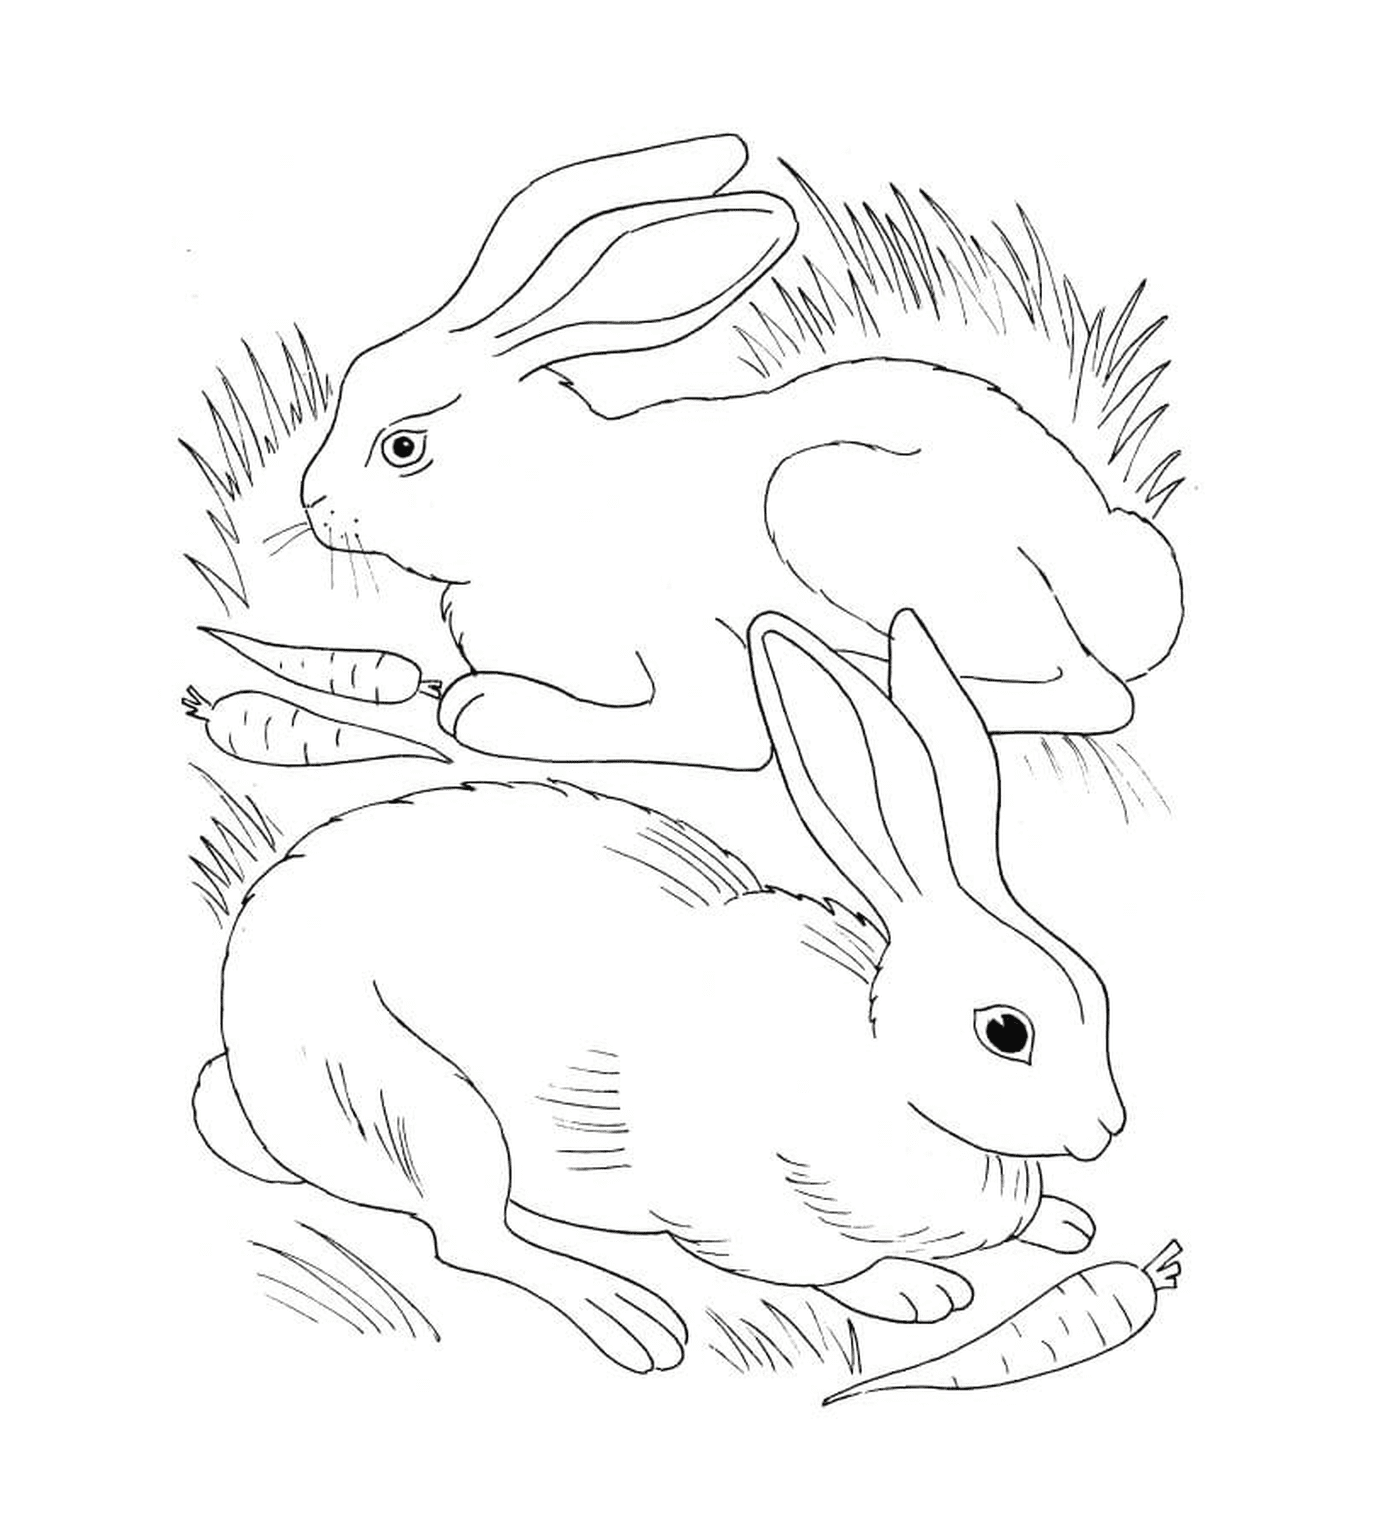  Rabbit and rabbit eating carrots 